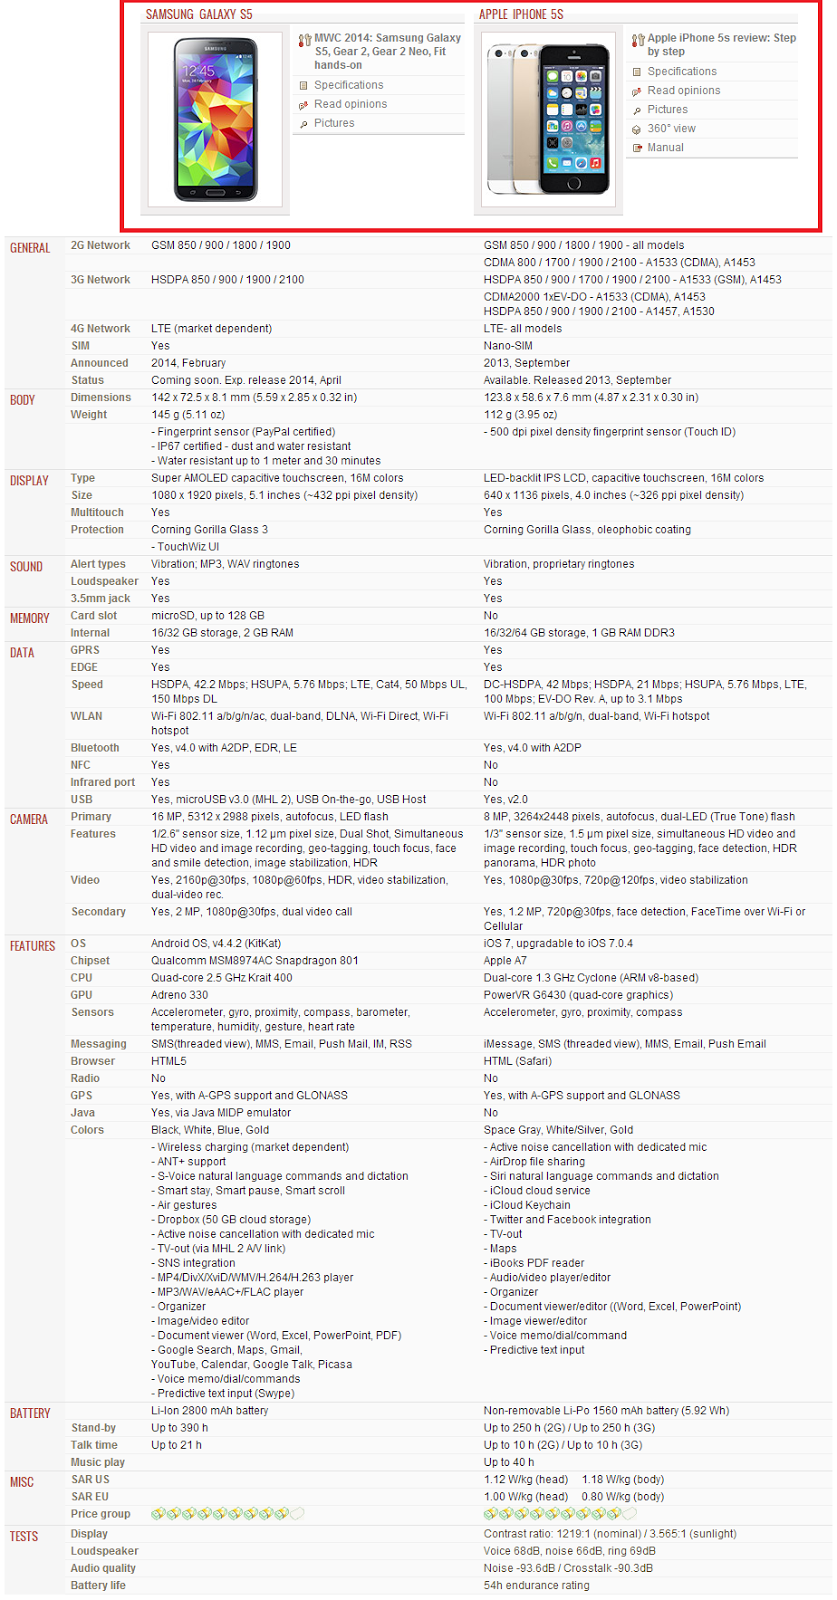 Complete Comparison Report of Samsung Galaxy S5 vs Apple iPhone 5S